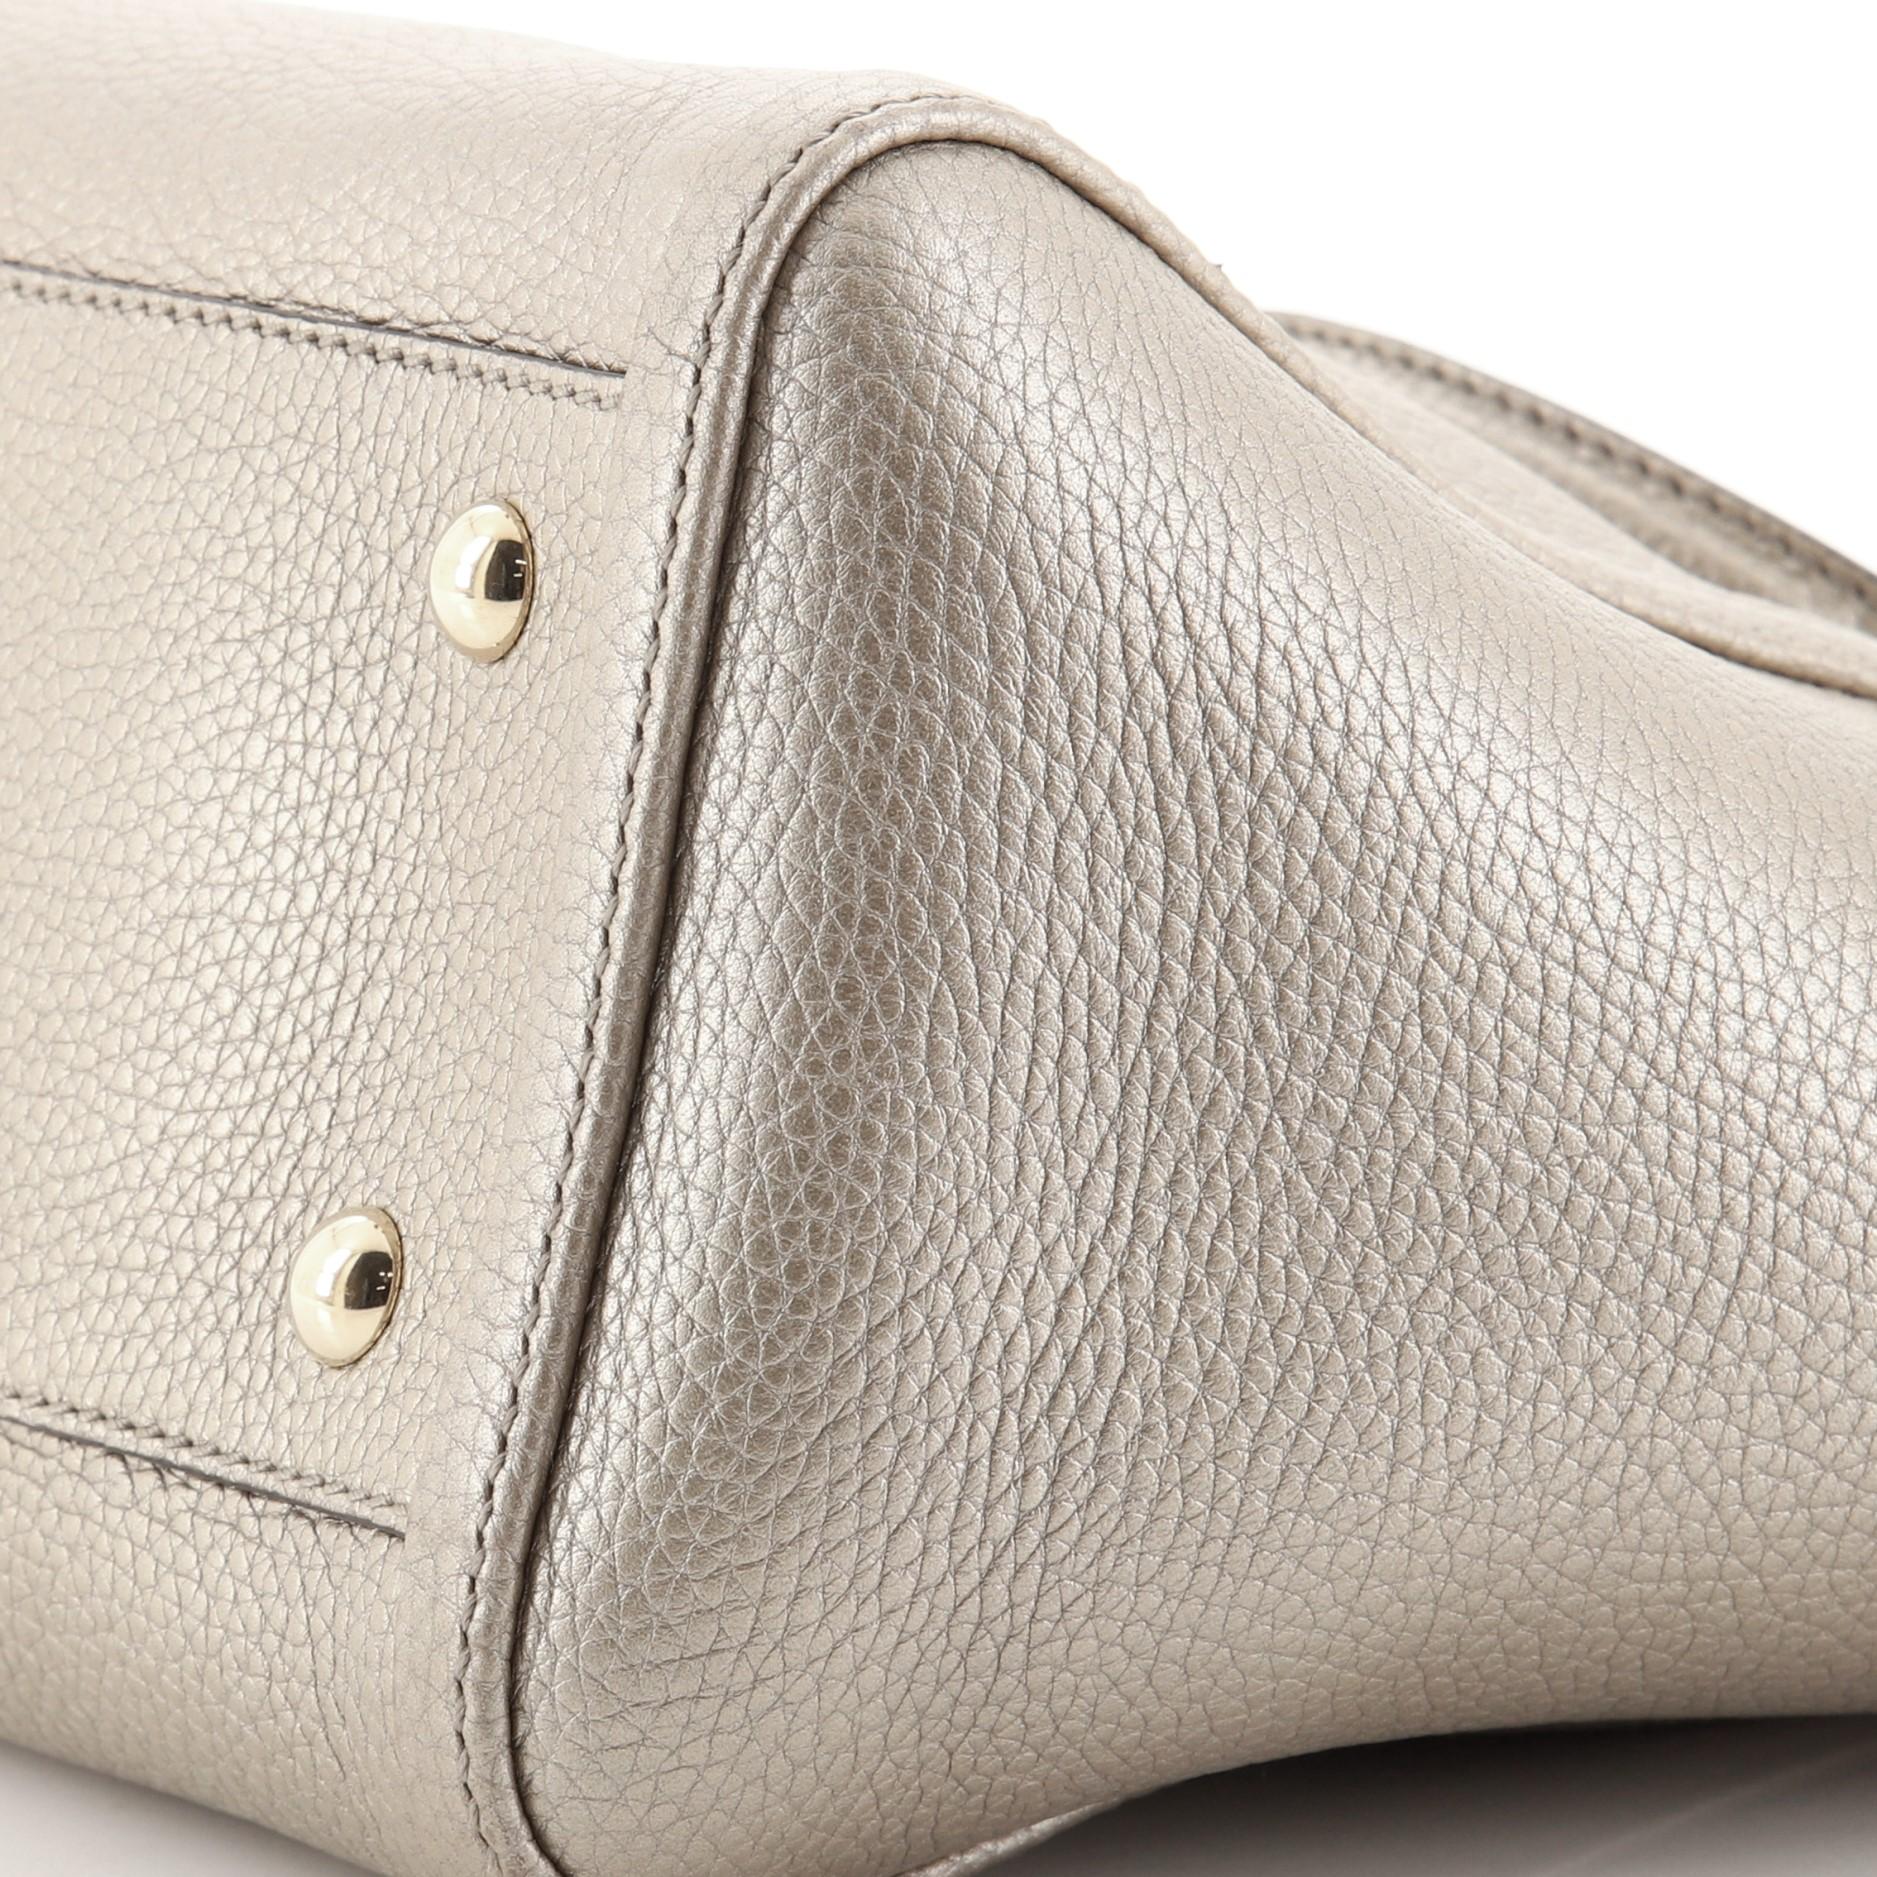 Gray Gucci Soho Convertible Top Handle Bag Leather Small